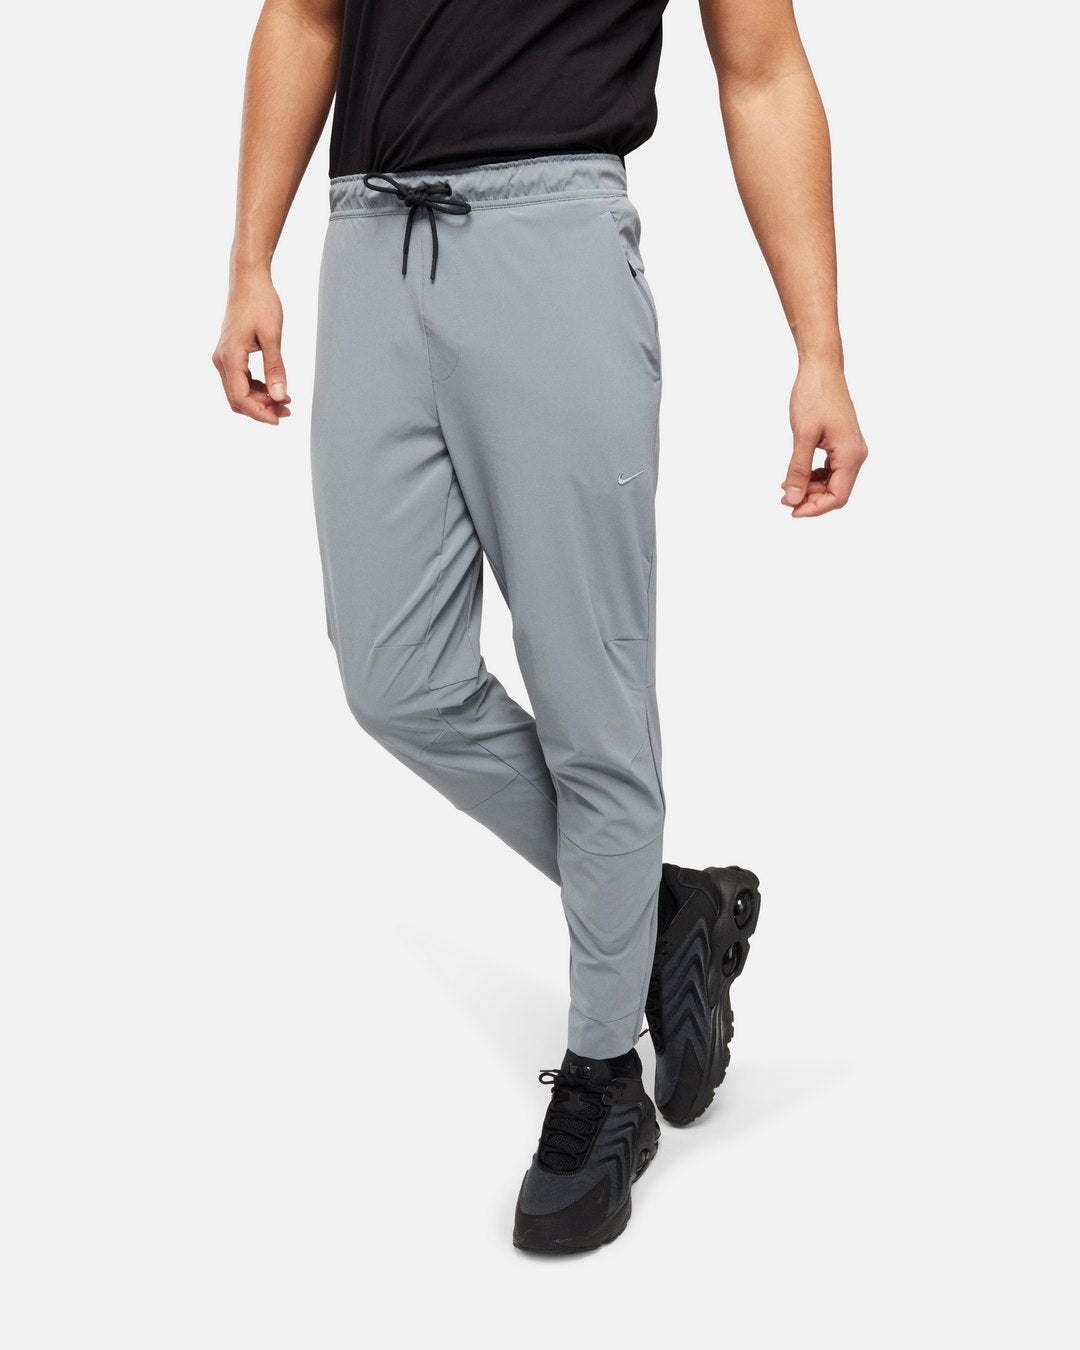 Nike Unlimited jogging pants - Gray